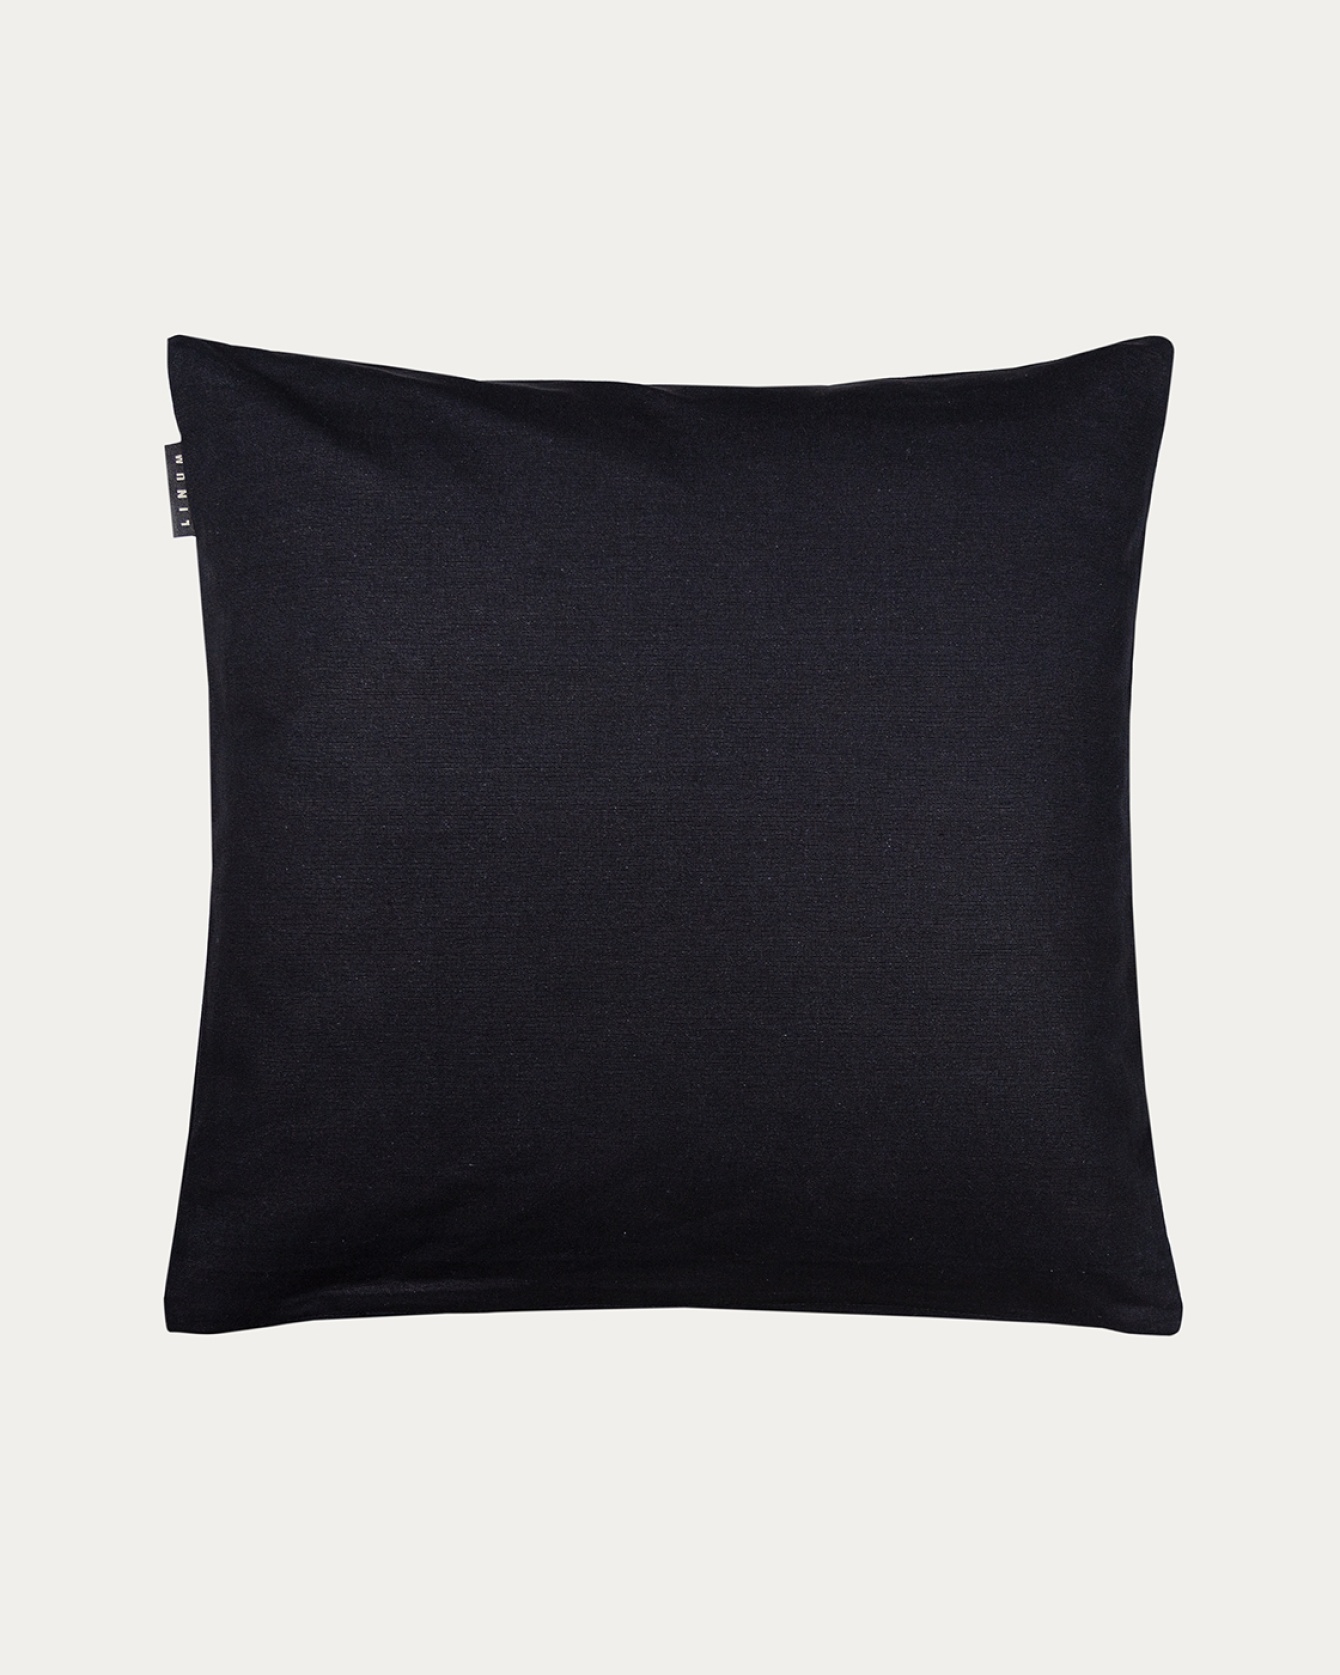 Produktbild svart ANNABELL kuddfodral av mjuk bomull från LINUM DESIGN. Storlek 50x50 cm.